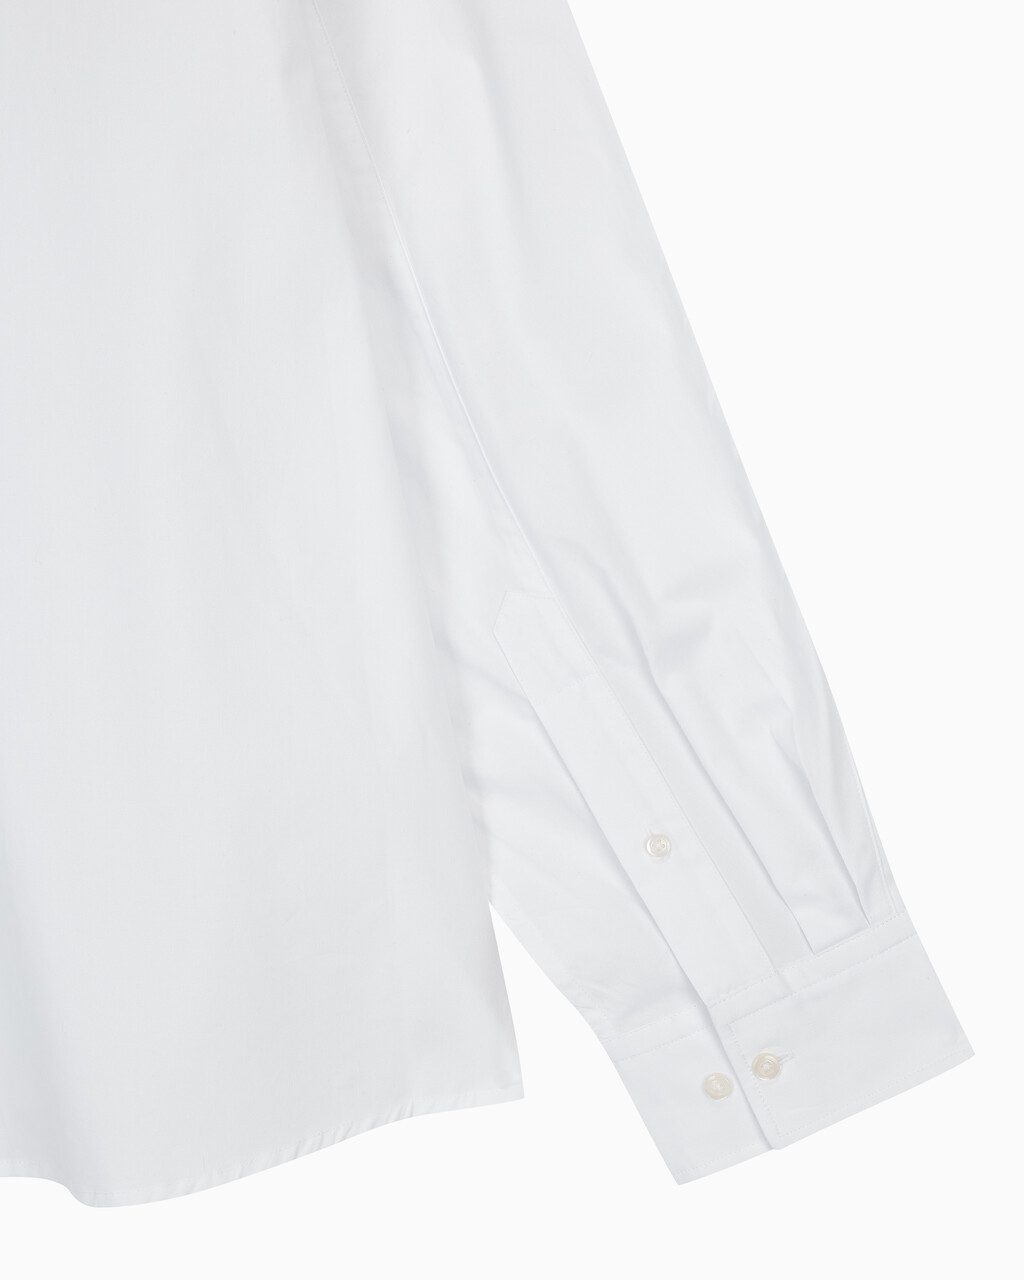 Buy 남녀공용 스탠다드 오버사이즈핏 코튼 셔츠 in color BRILLIANT WHITE